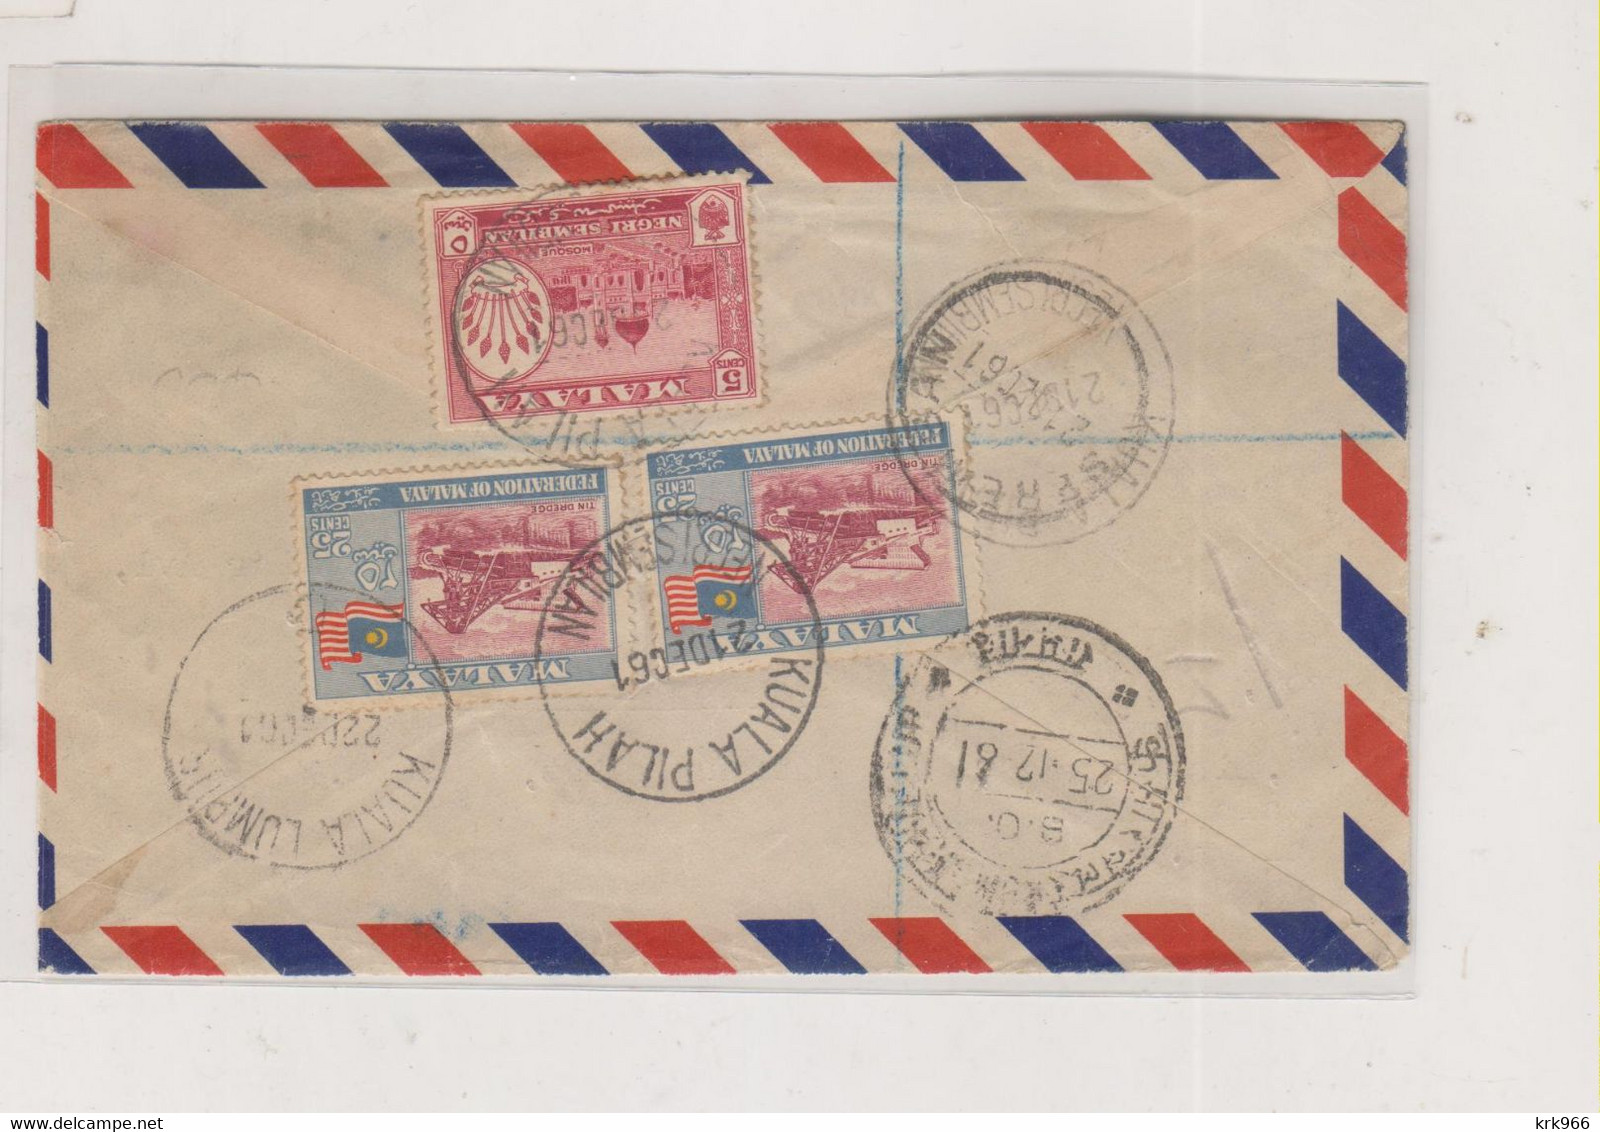 MALAYA KUALA PILAH  1961  Registered Airmail Cover - Federation Of Malaya